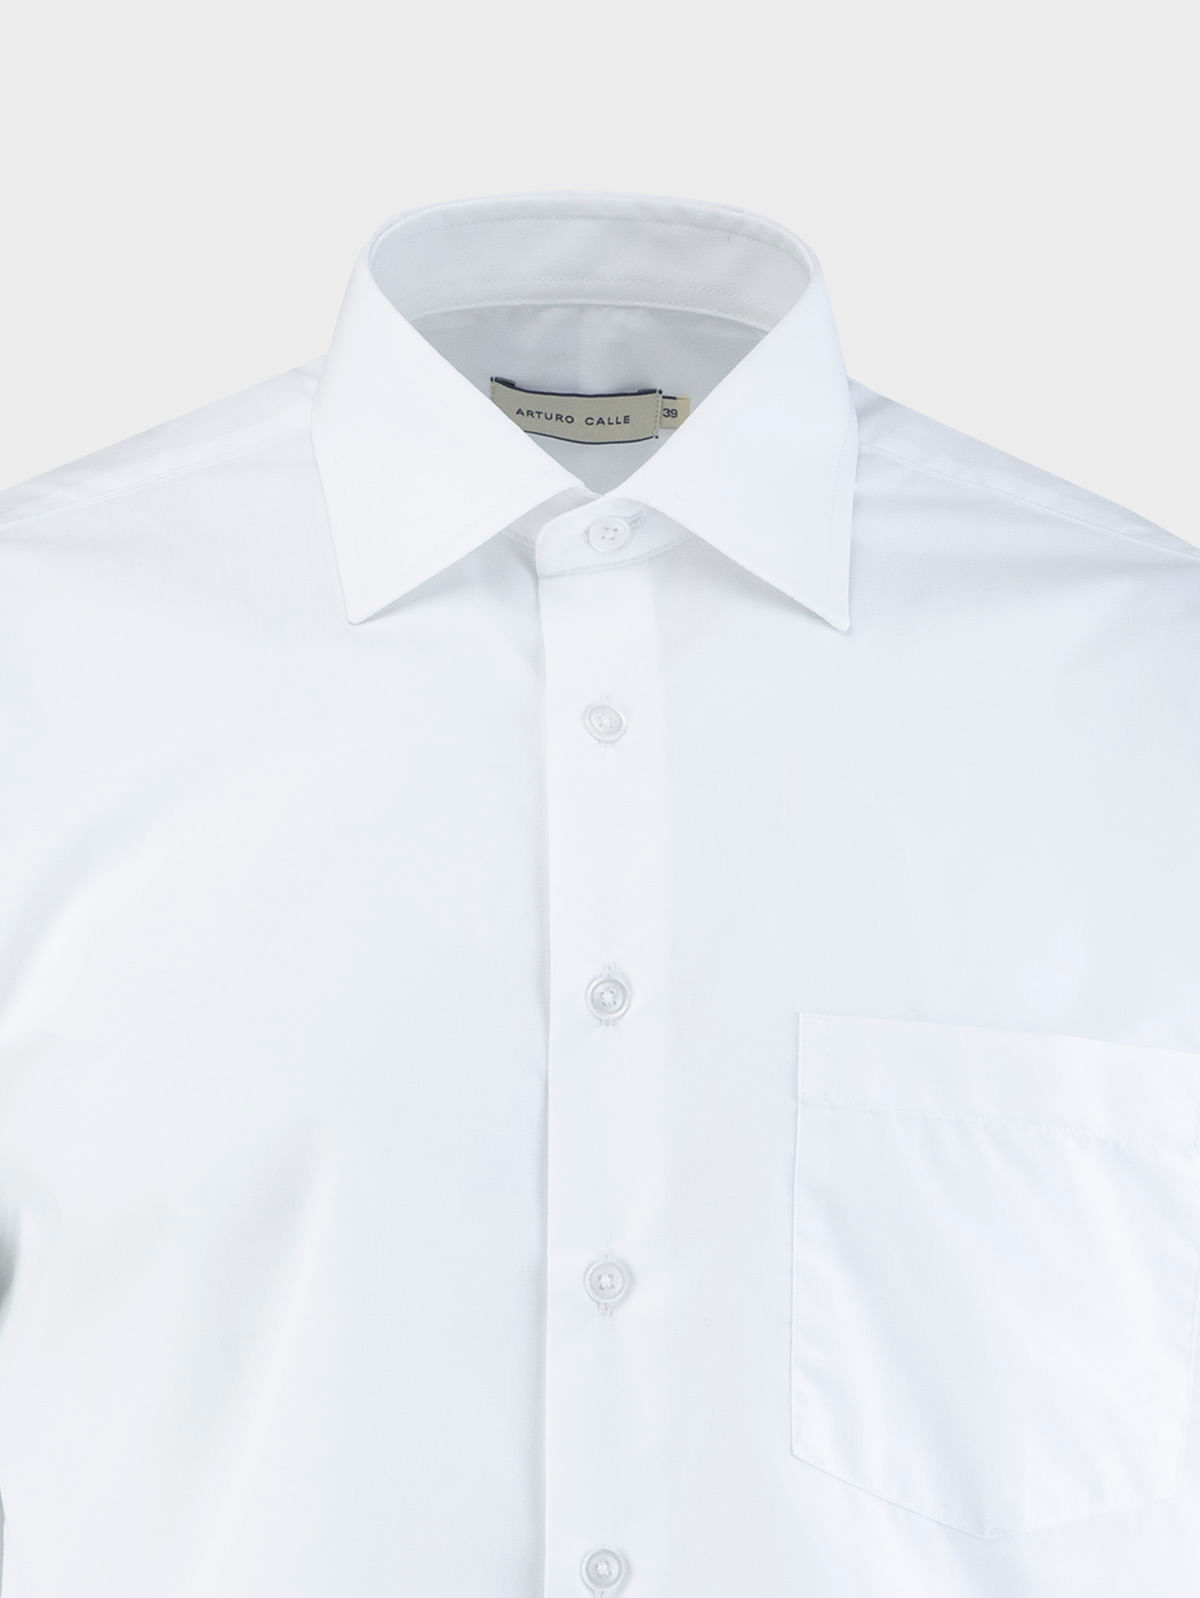 Camisa de vestir hombre blanca regular